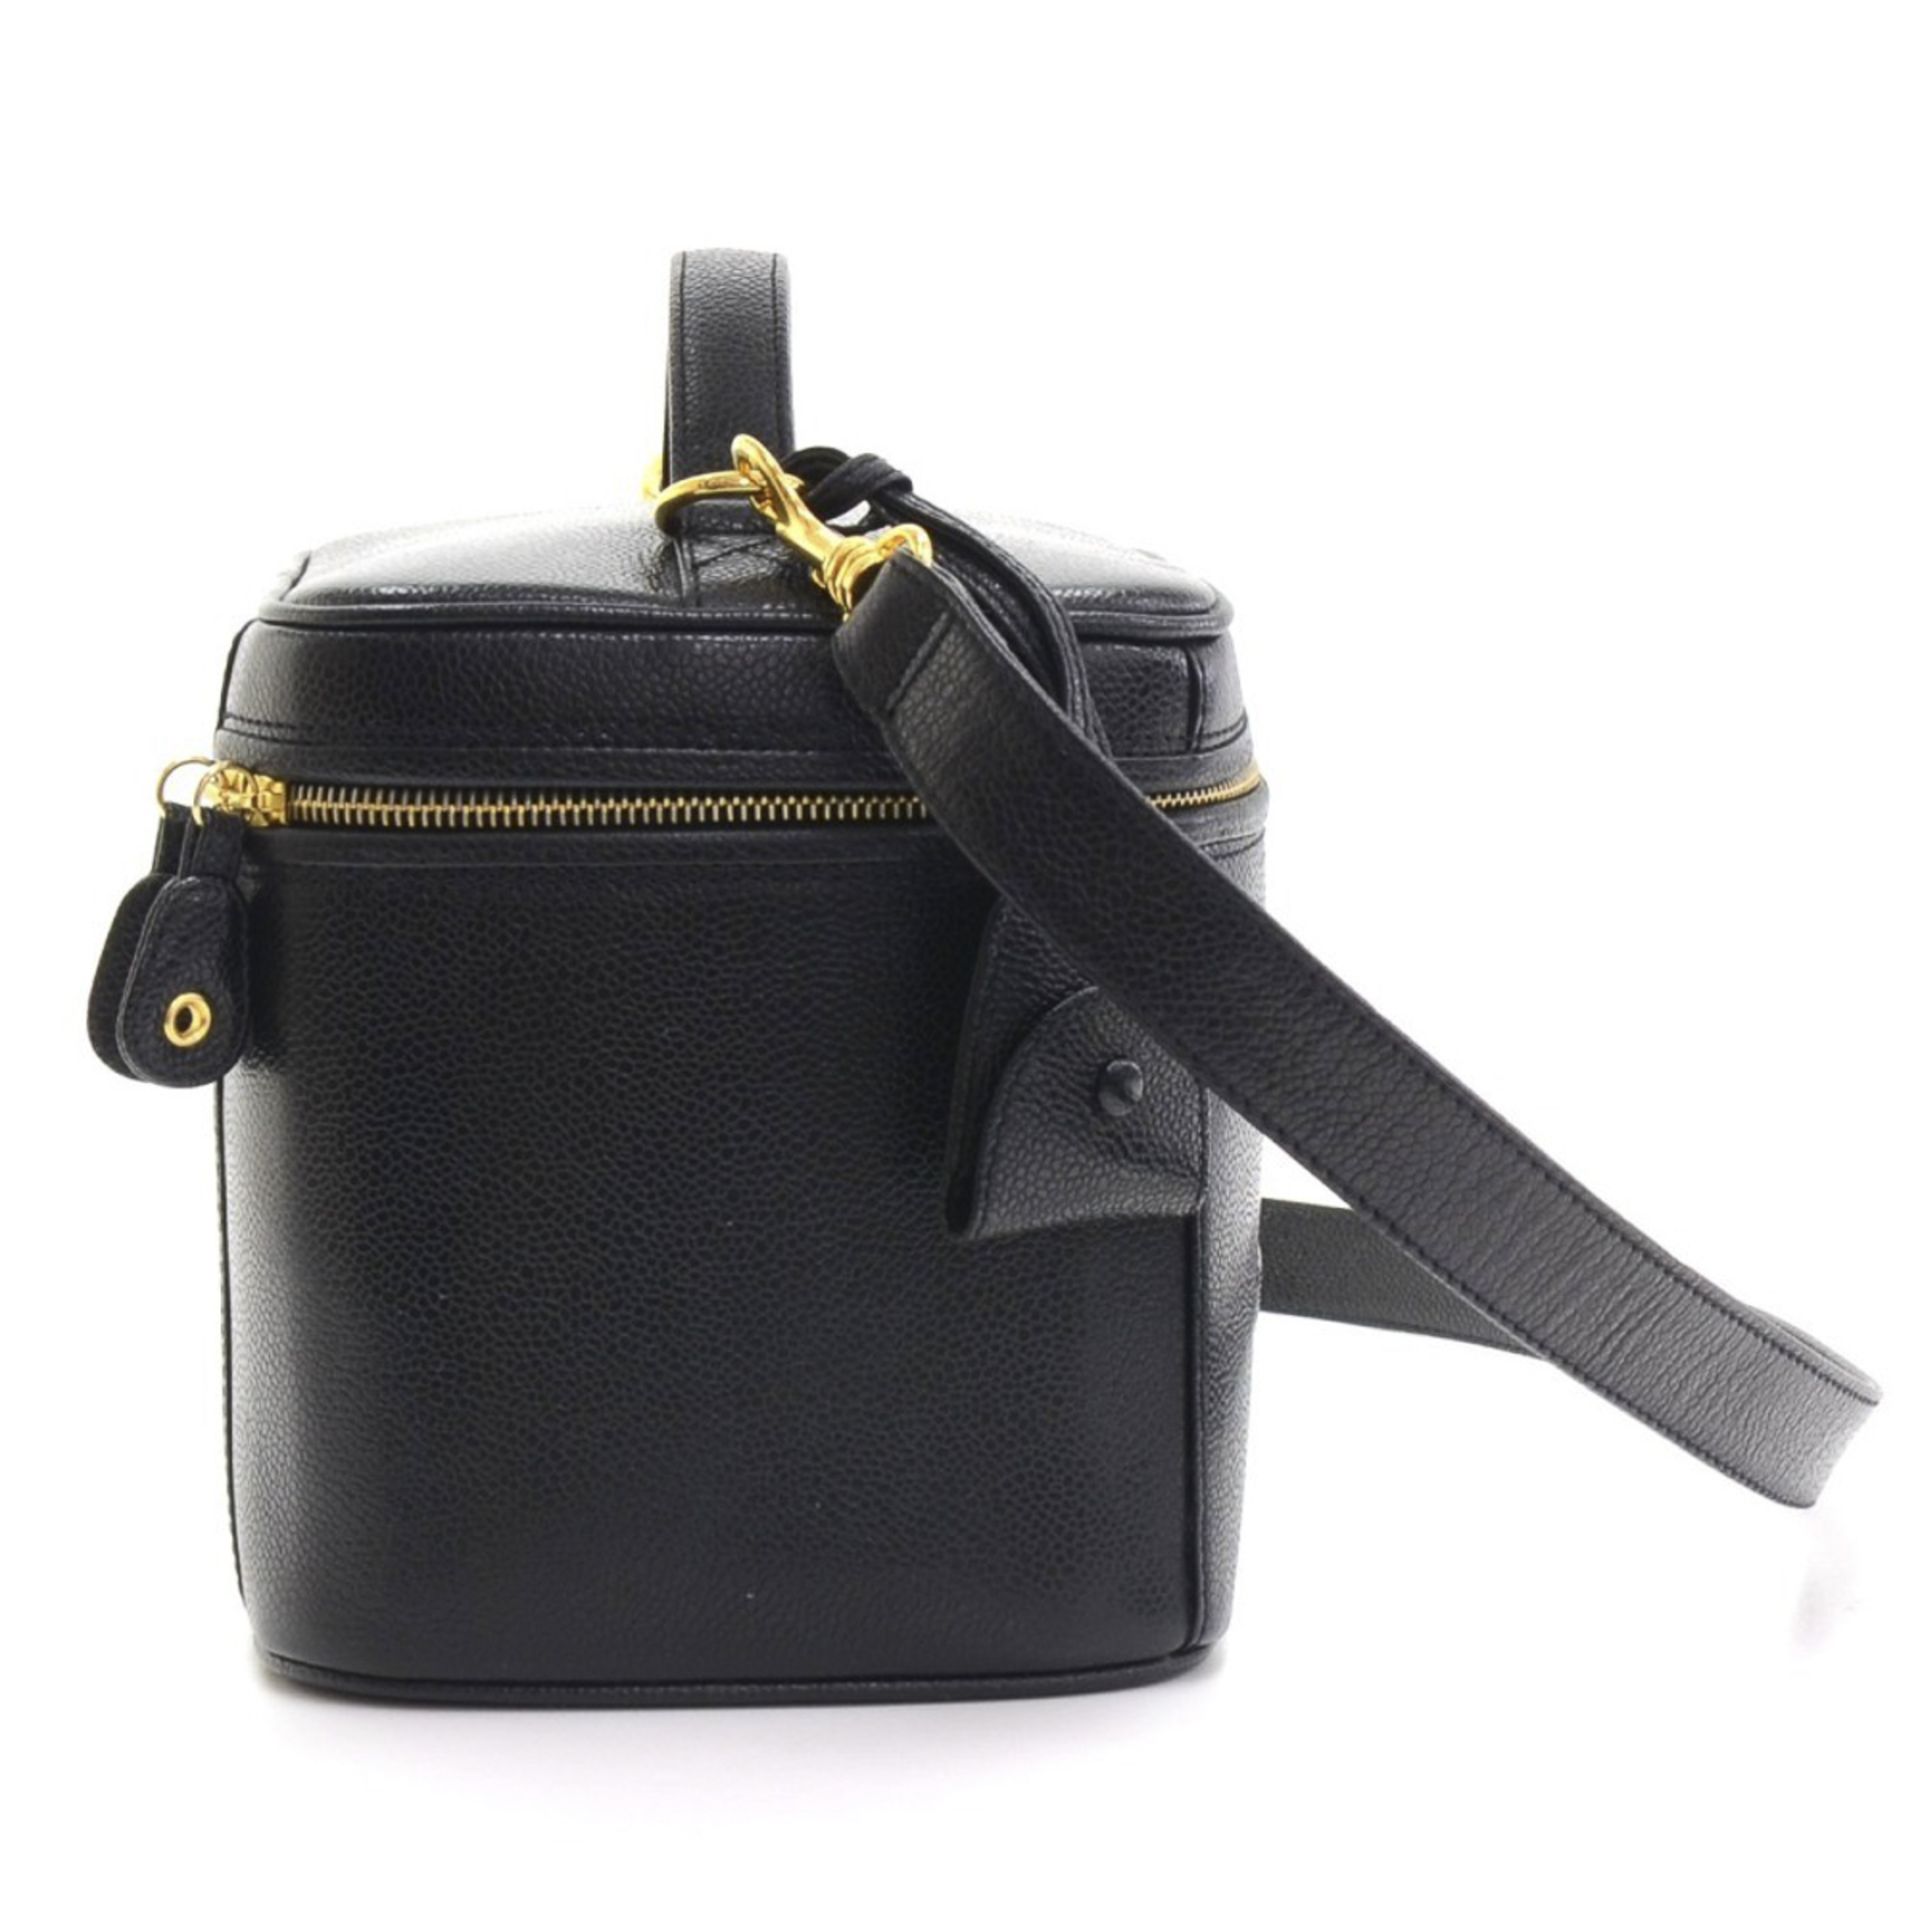 Chanel, Timeless Vanity Handbag - Image 3 of 14